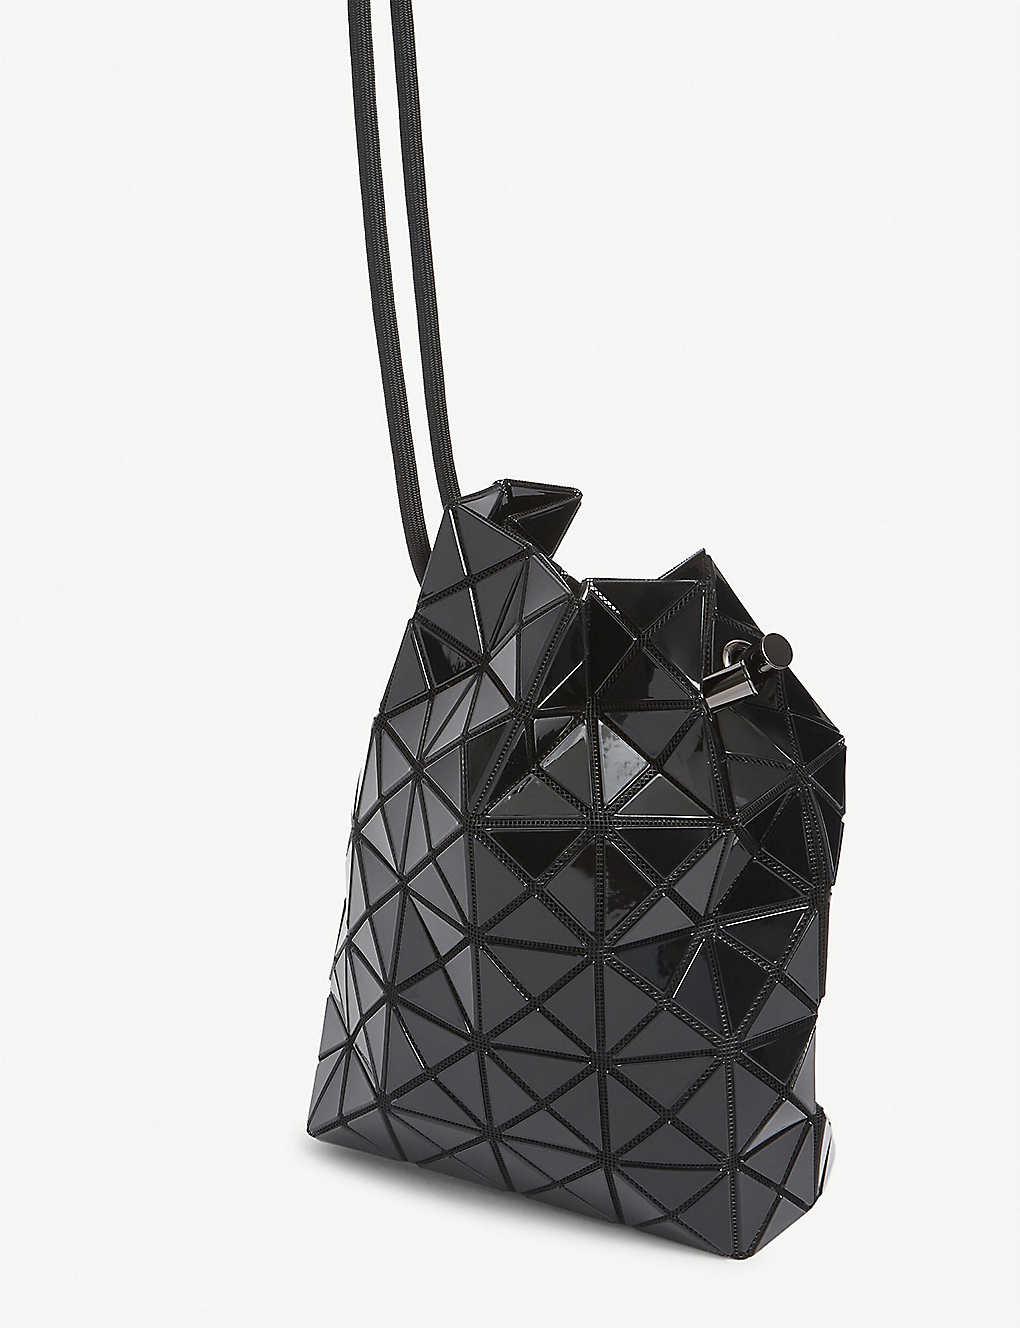 Bao Bao Issey Miyake Synthetic Wring Gloss Bucket Bag in Black - Lyst